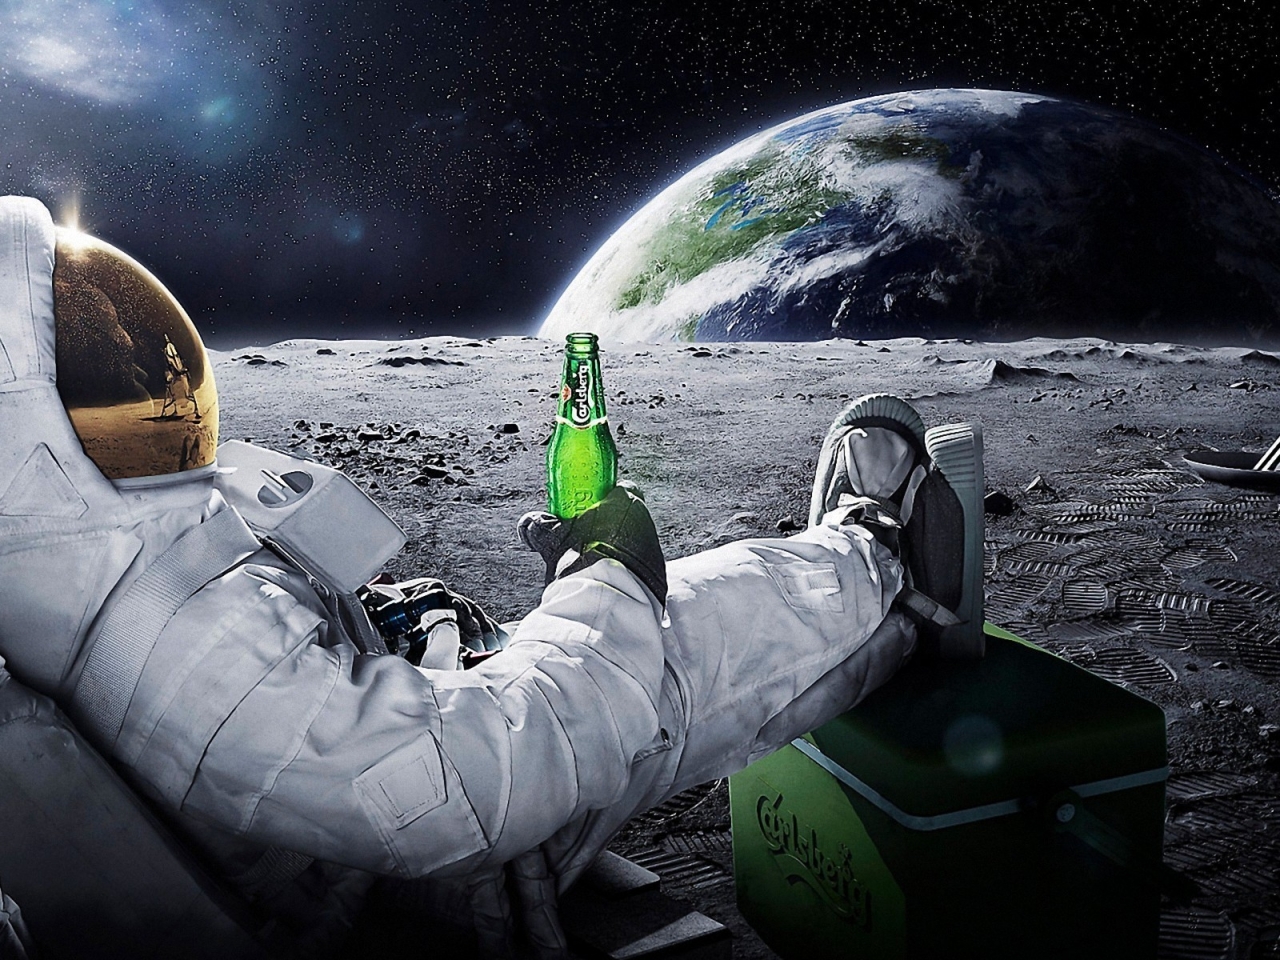 Carlsberg Beer in Space for 1280 x 960 resolution